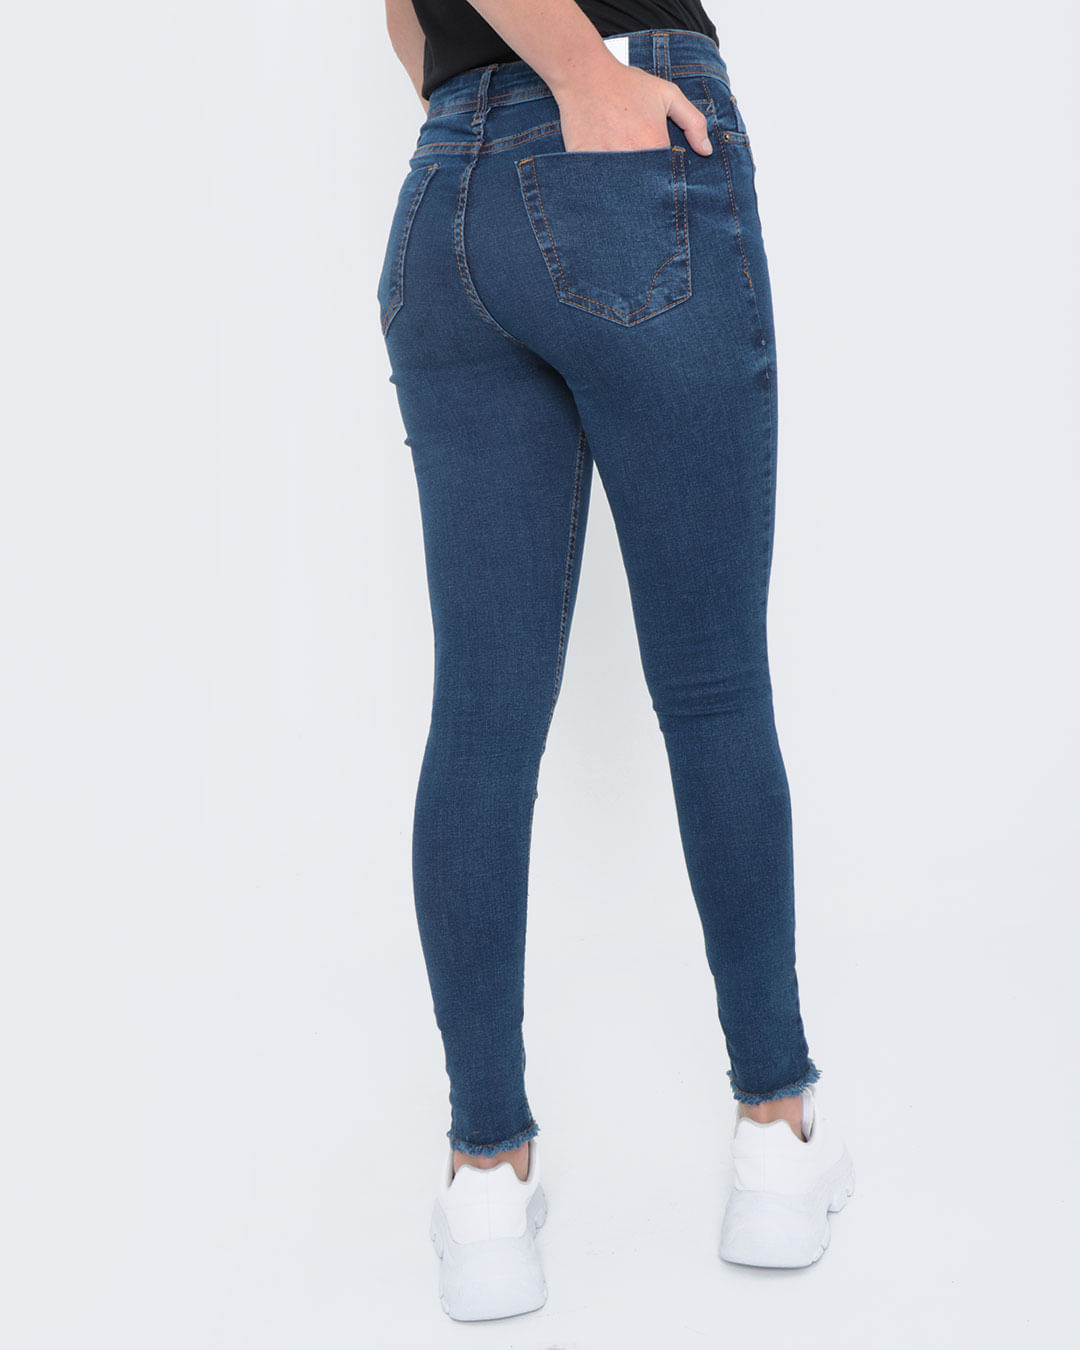 Calca-Jeans-Feminina-Super-Skinny-Puidos-Azul